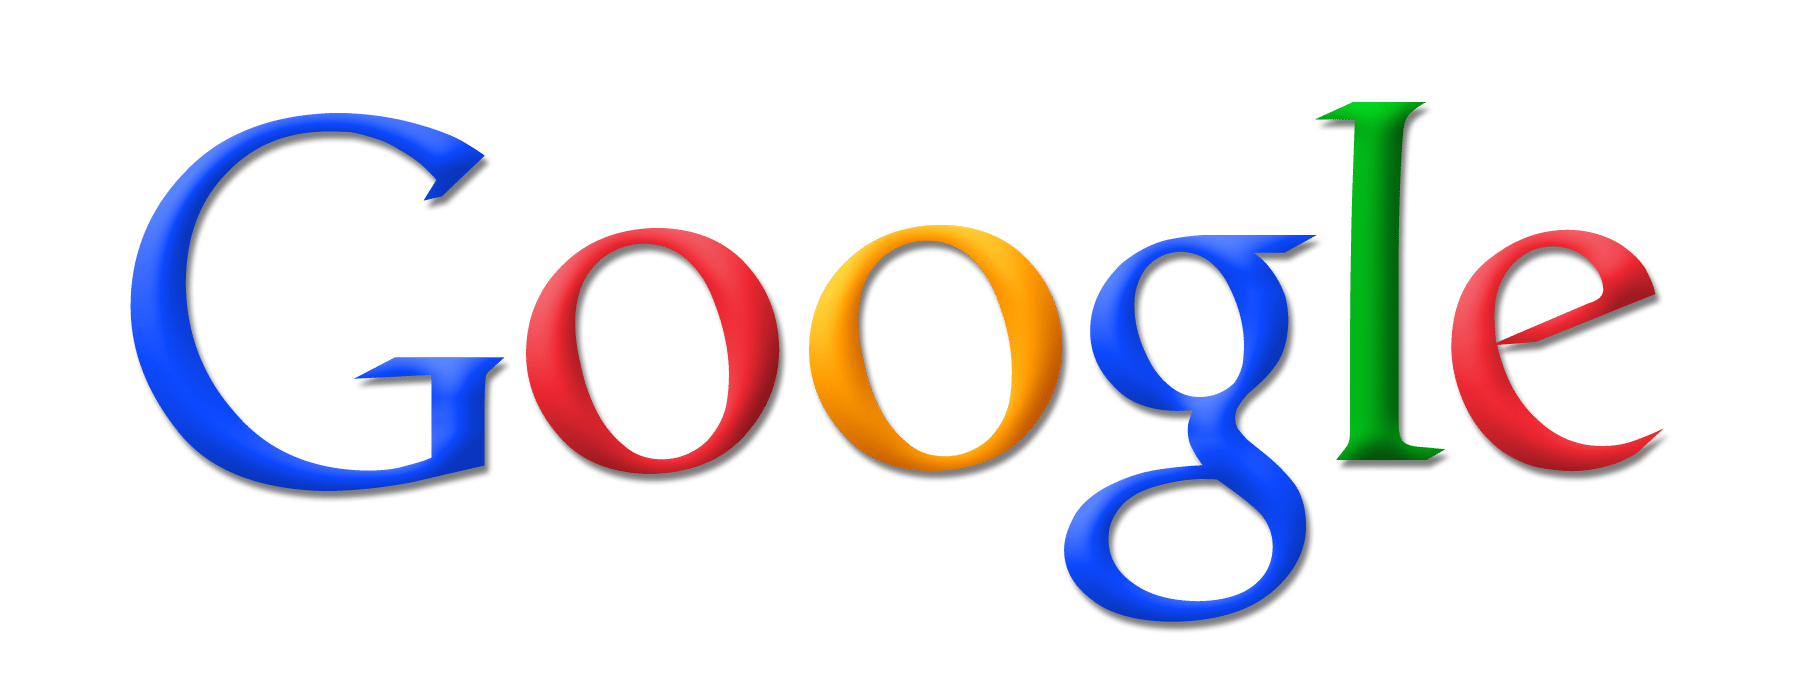 new-google-logo-knockoff